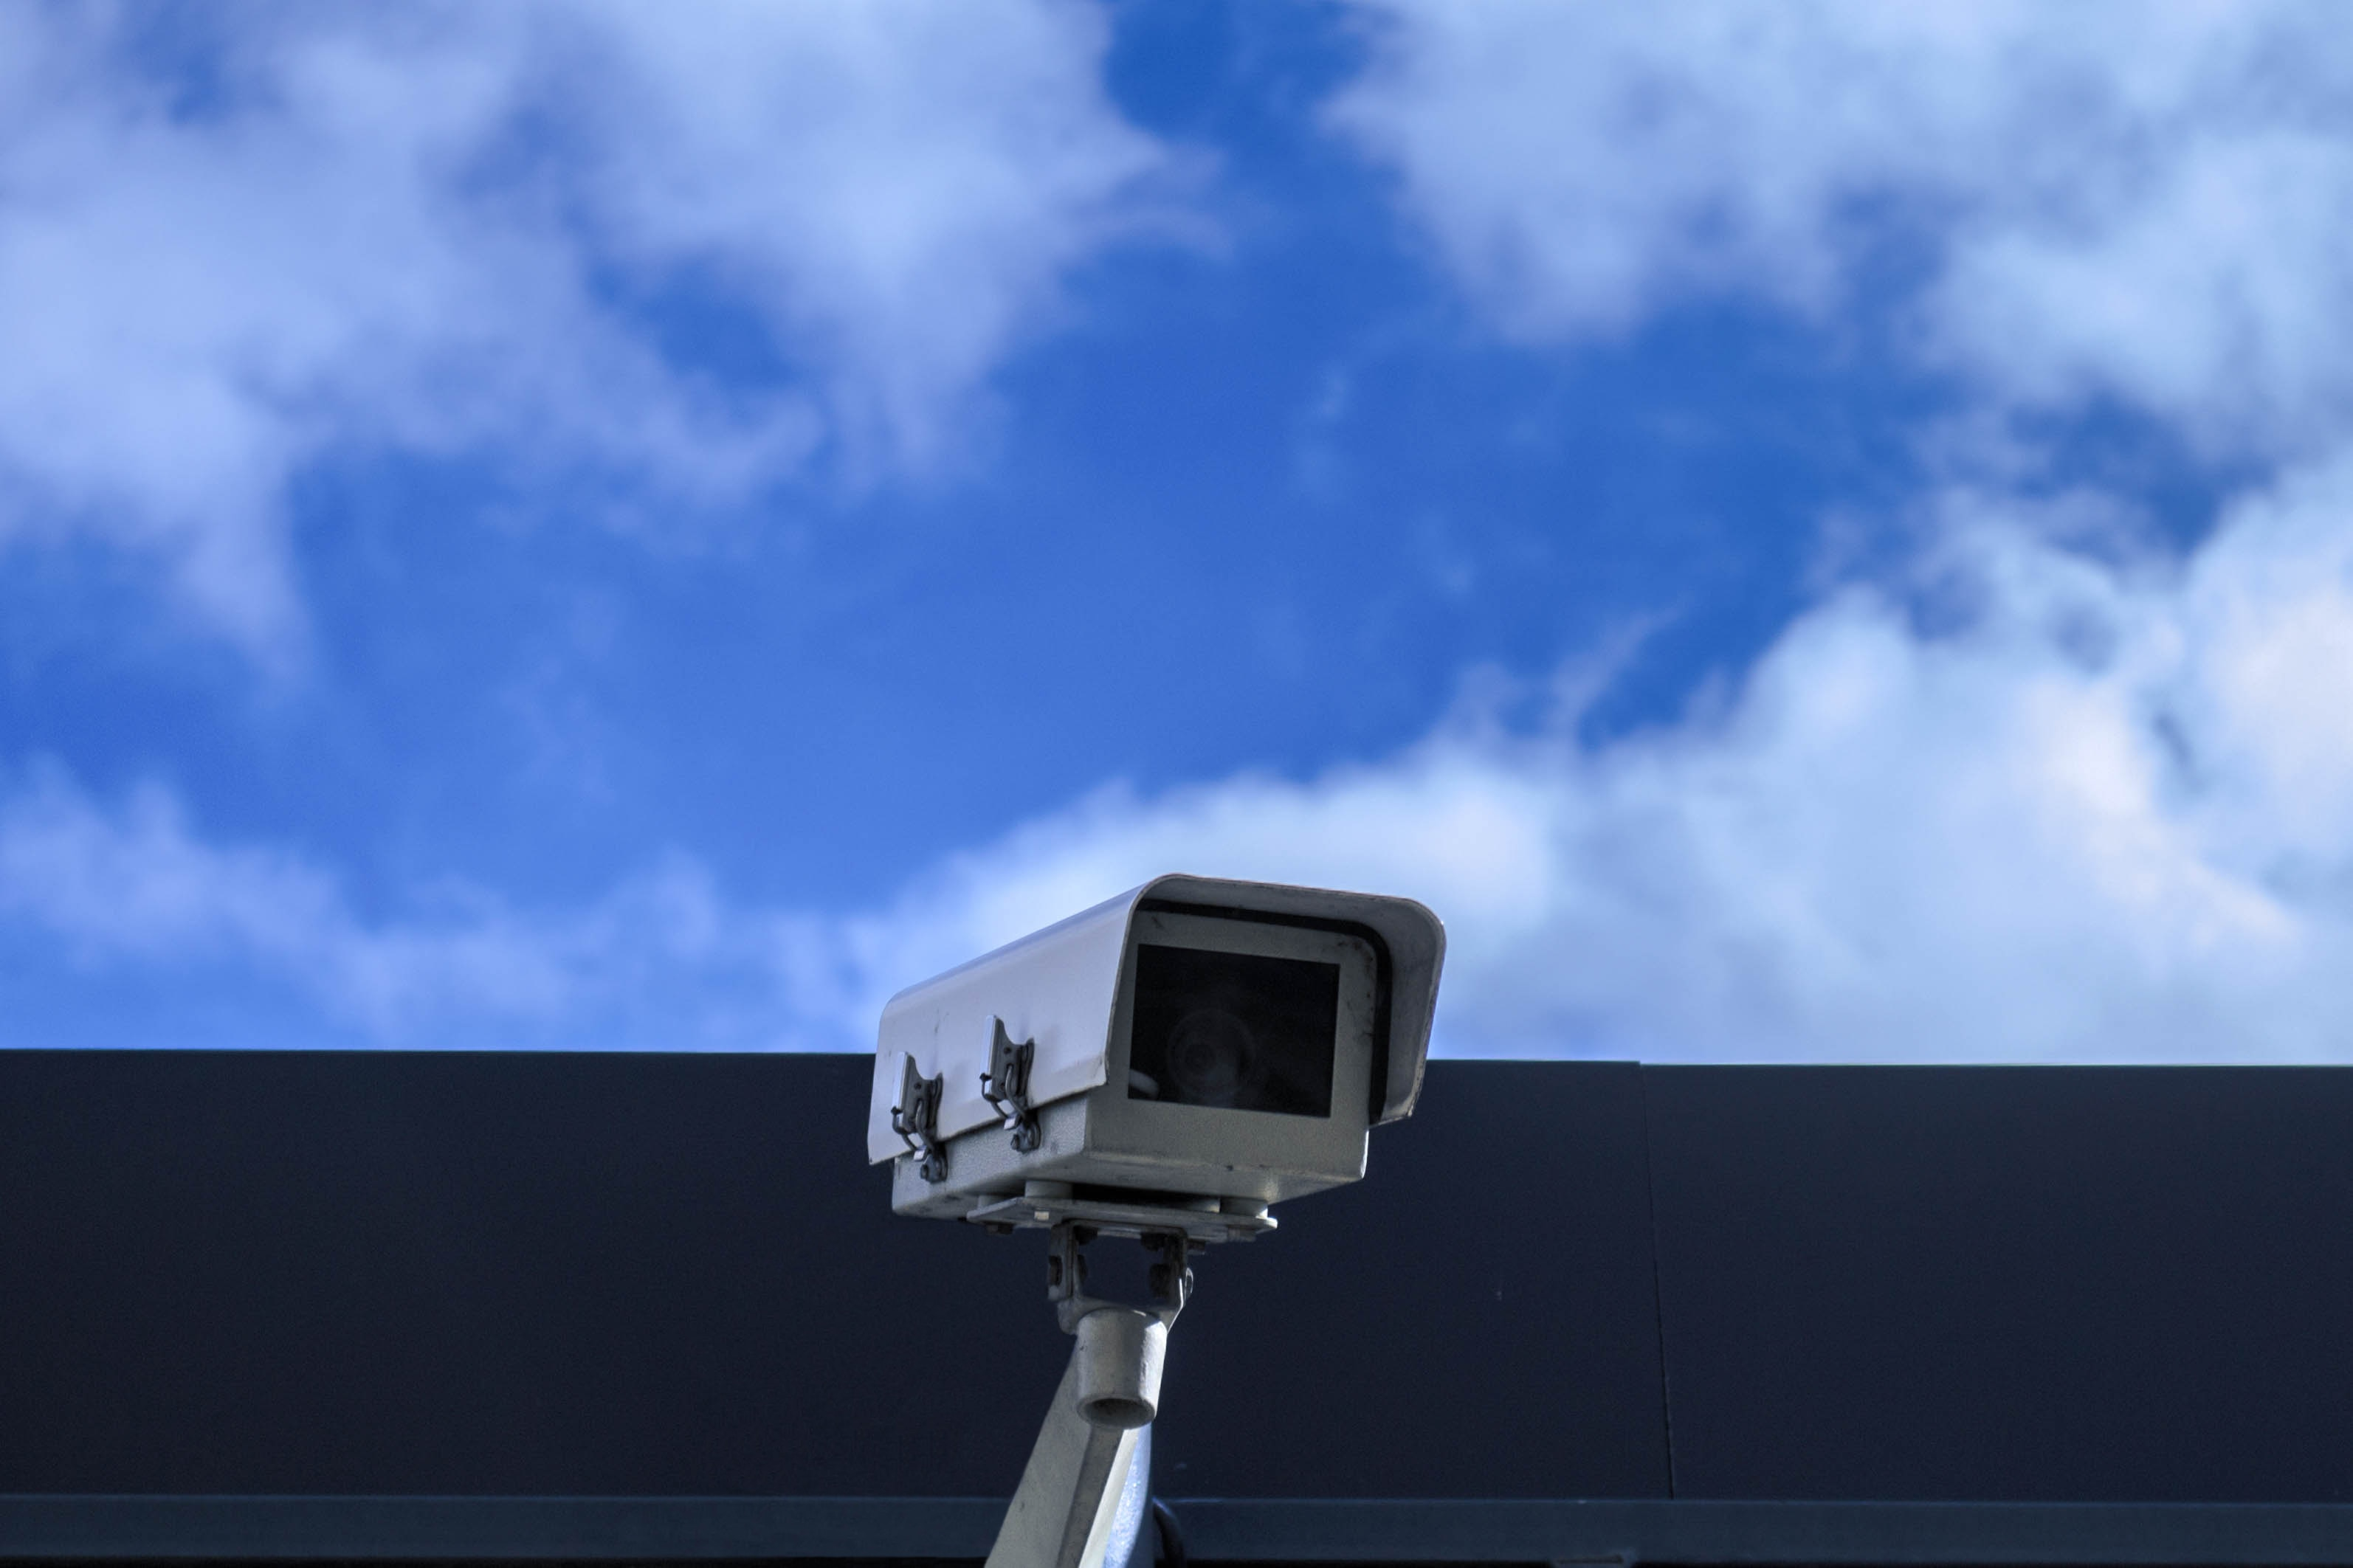 A security camera system providing remote video monitoring in Atlanta